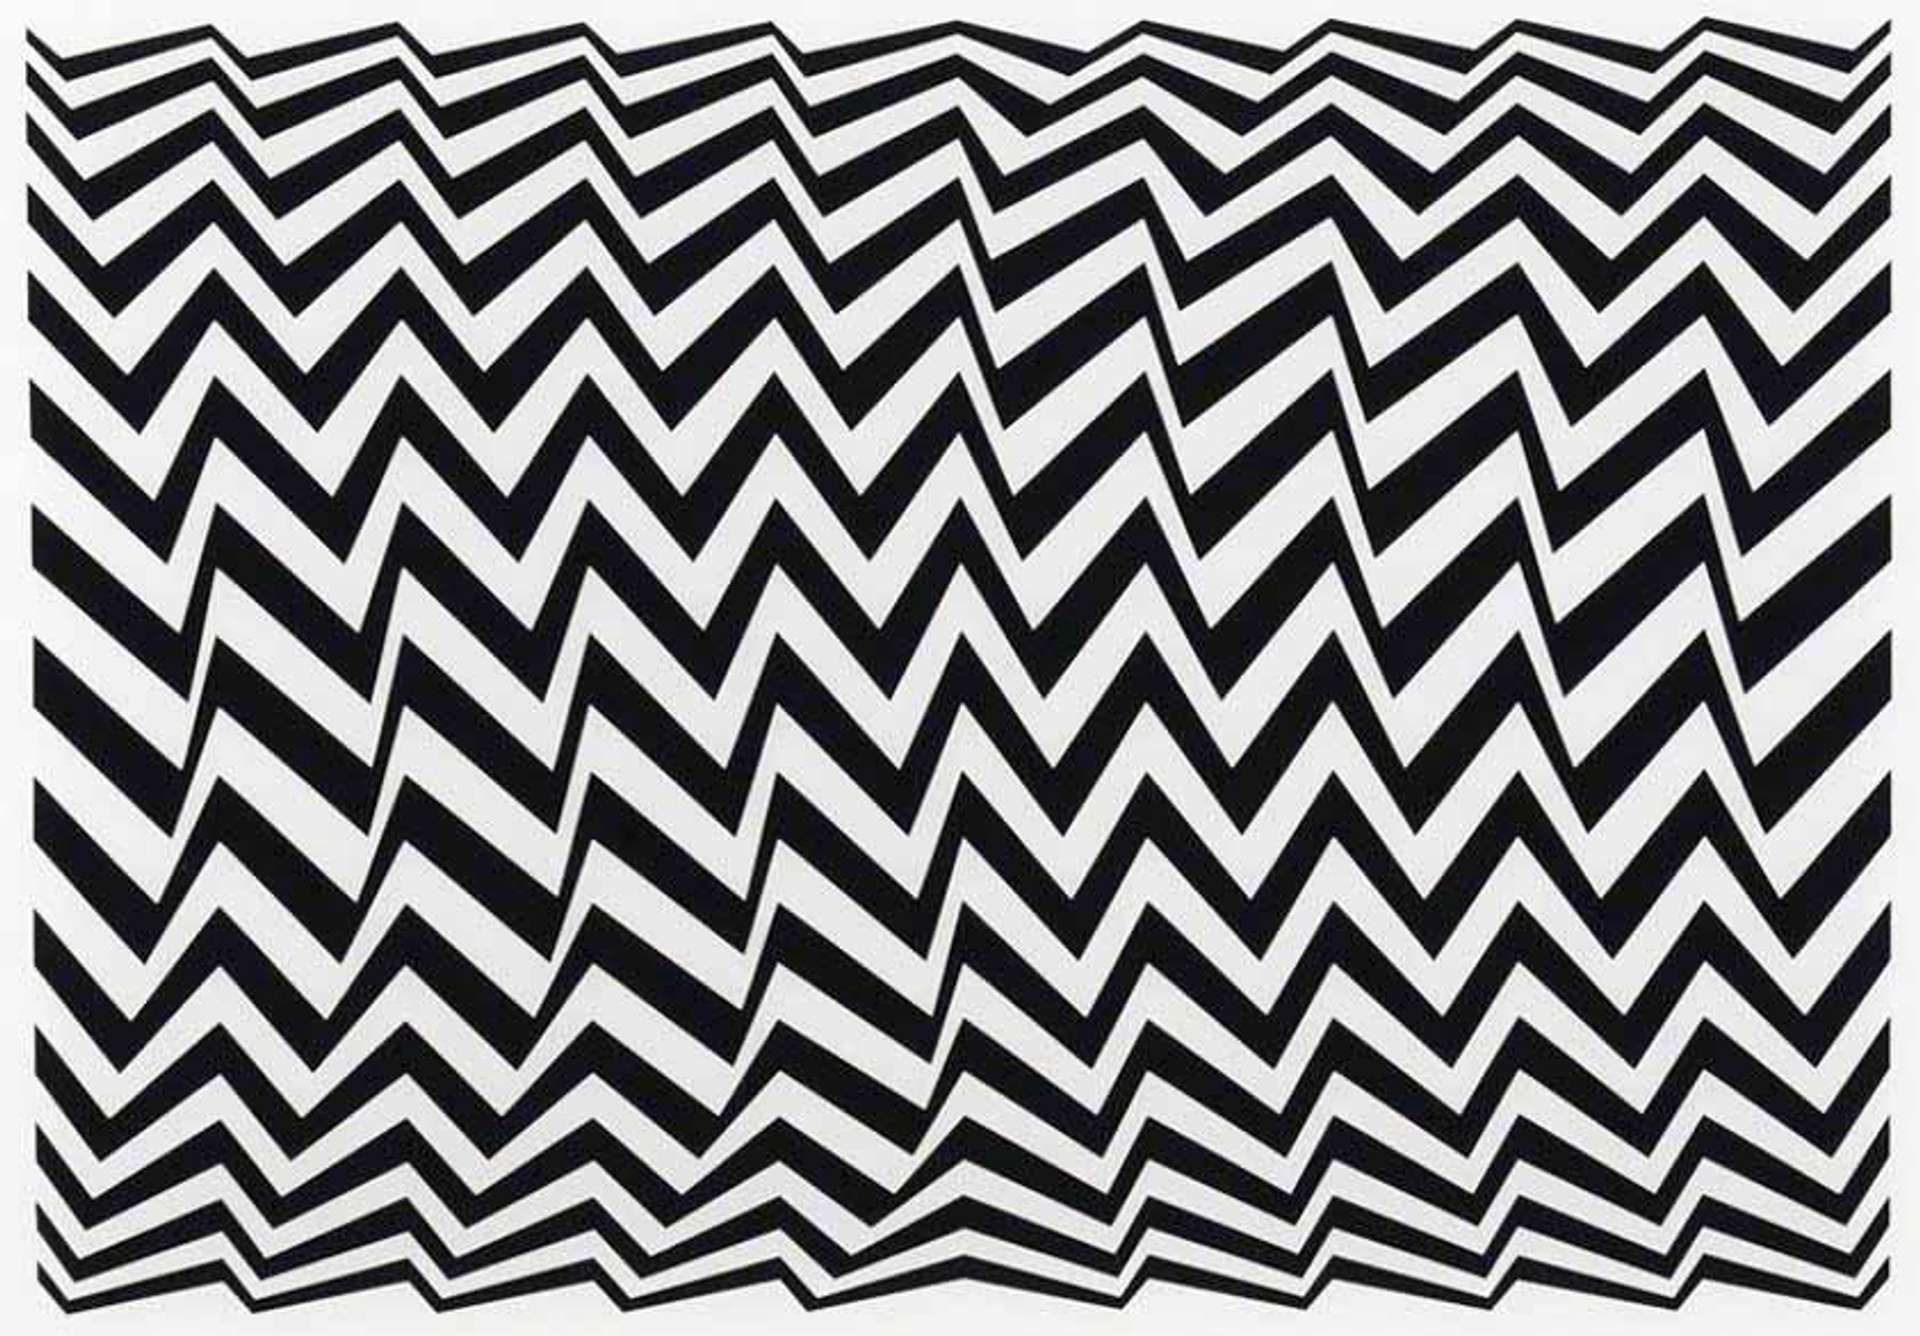 Bridget Riley’s Fragment 3. An Op Art screenprint of a pattern of black and white zig-zag patterned stripes.